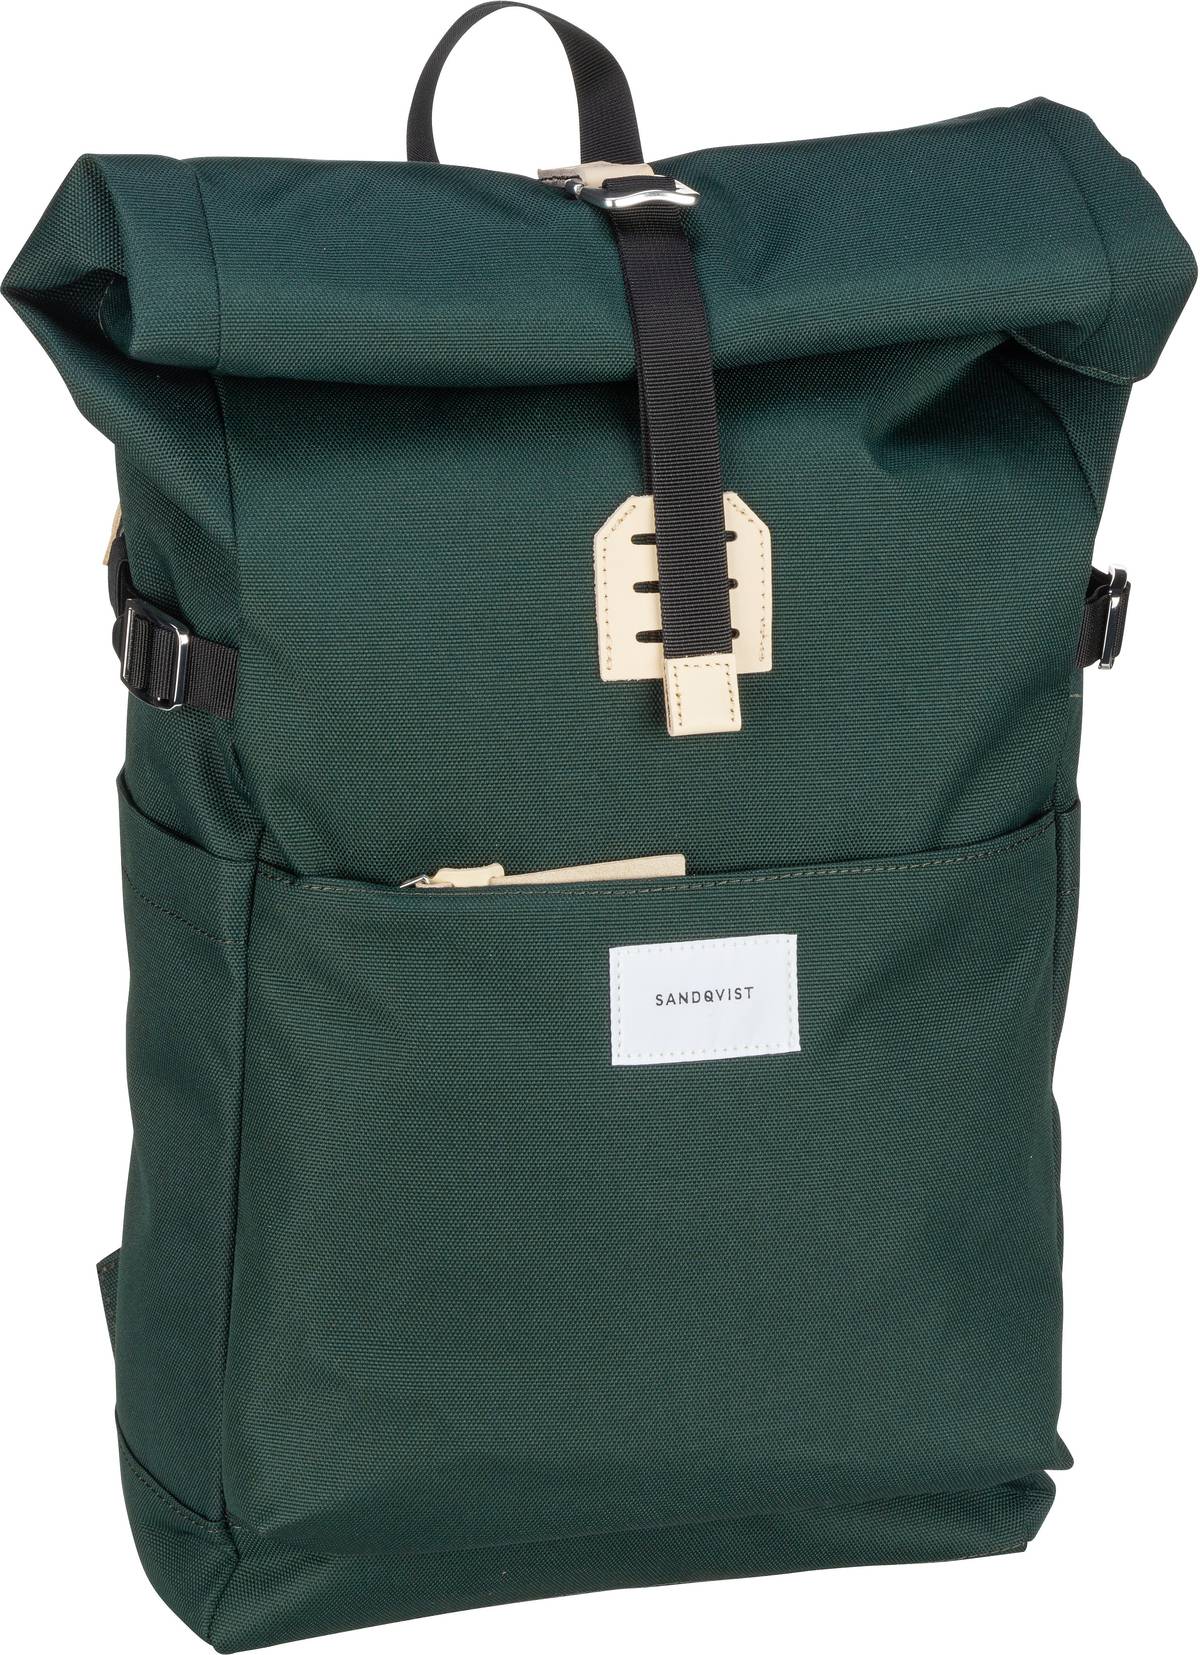 Sandqvist Ilon Rolltop Backpack - Dark Green/Natural Leather